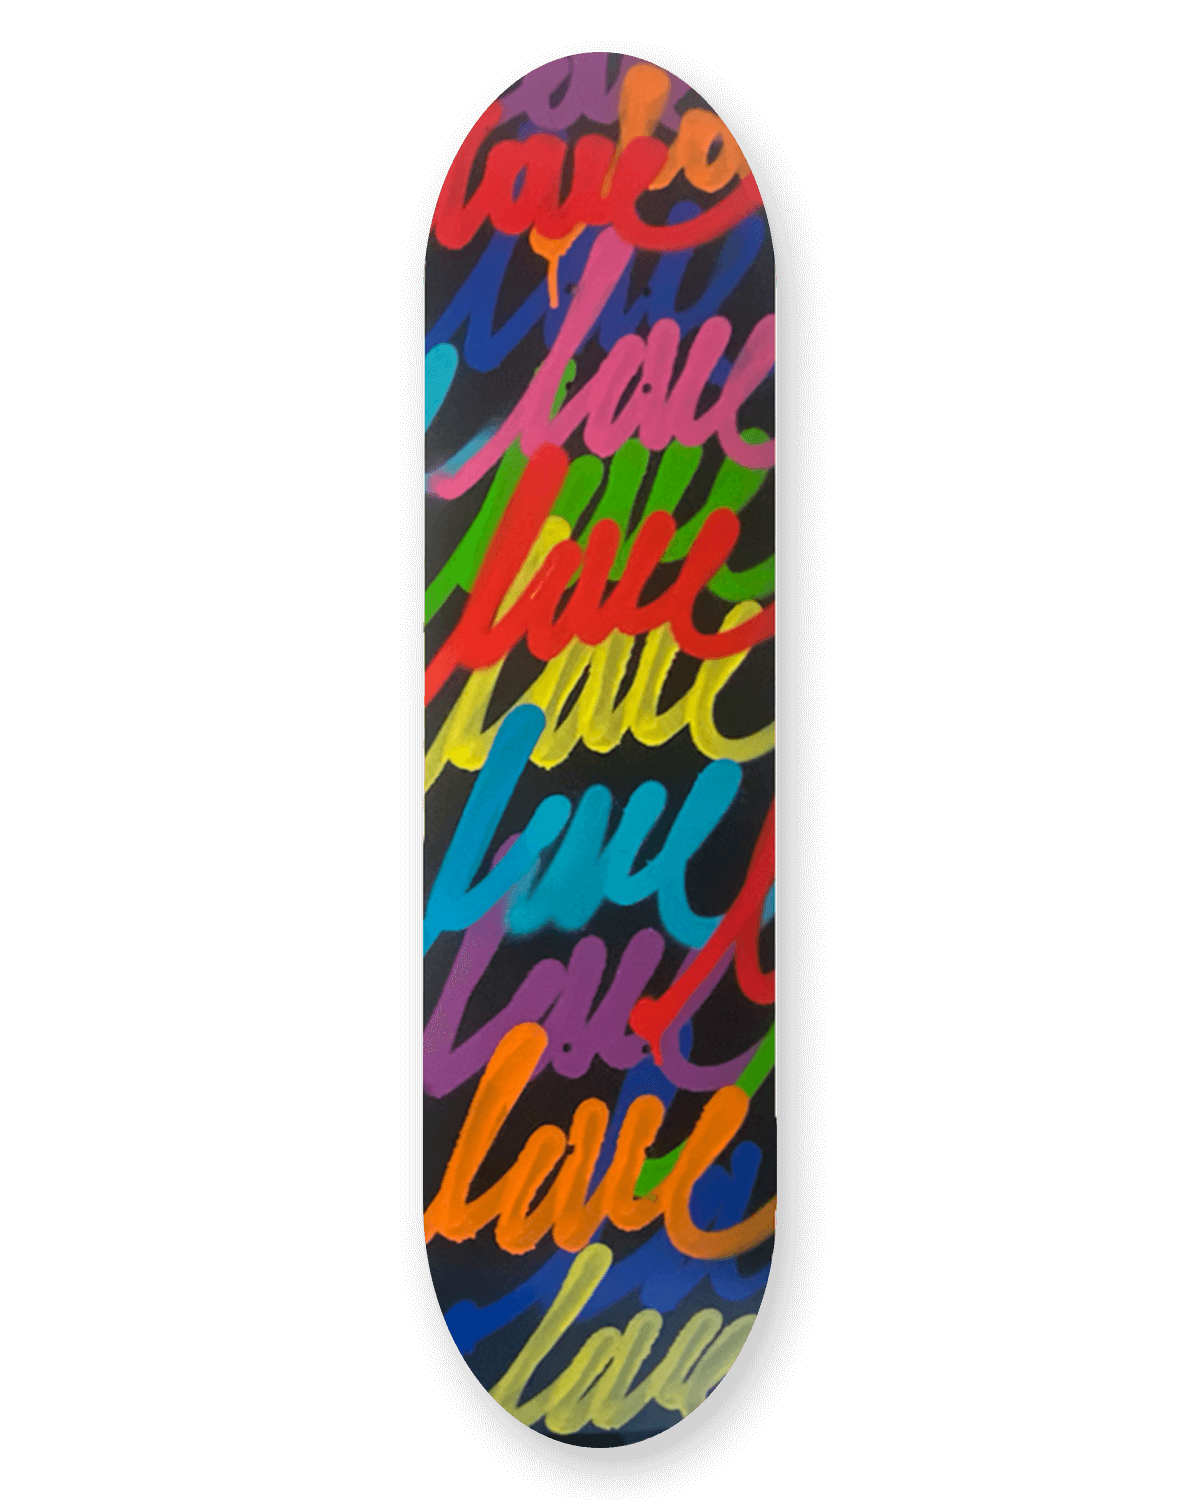 Hand Painted Original Skateboard